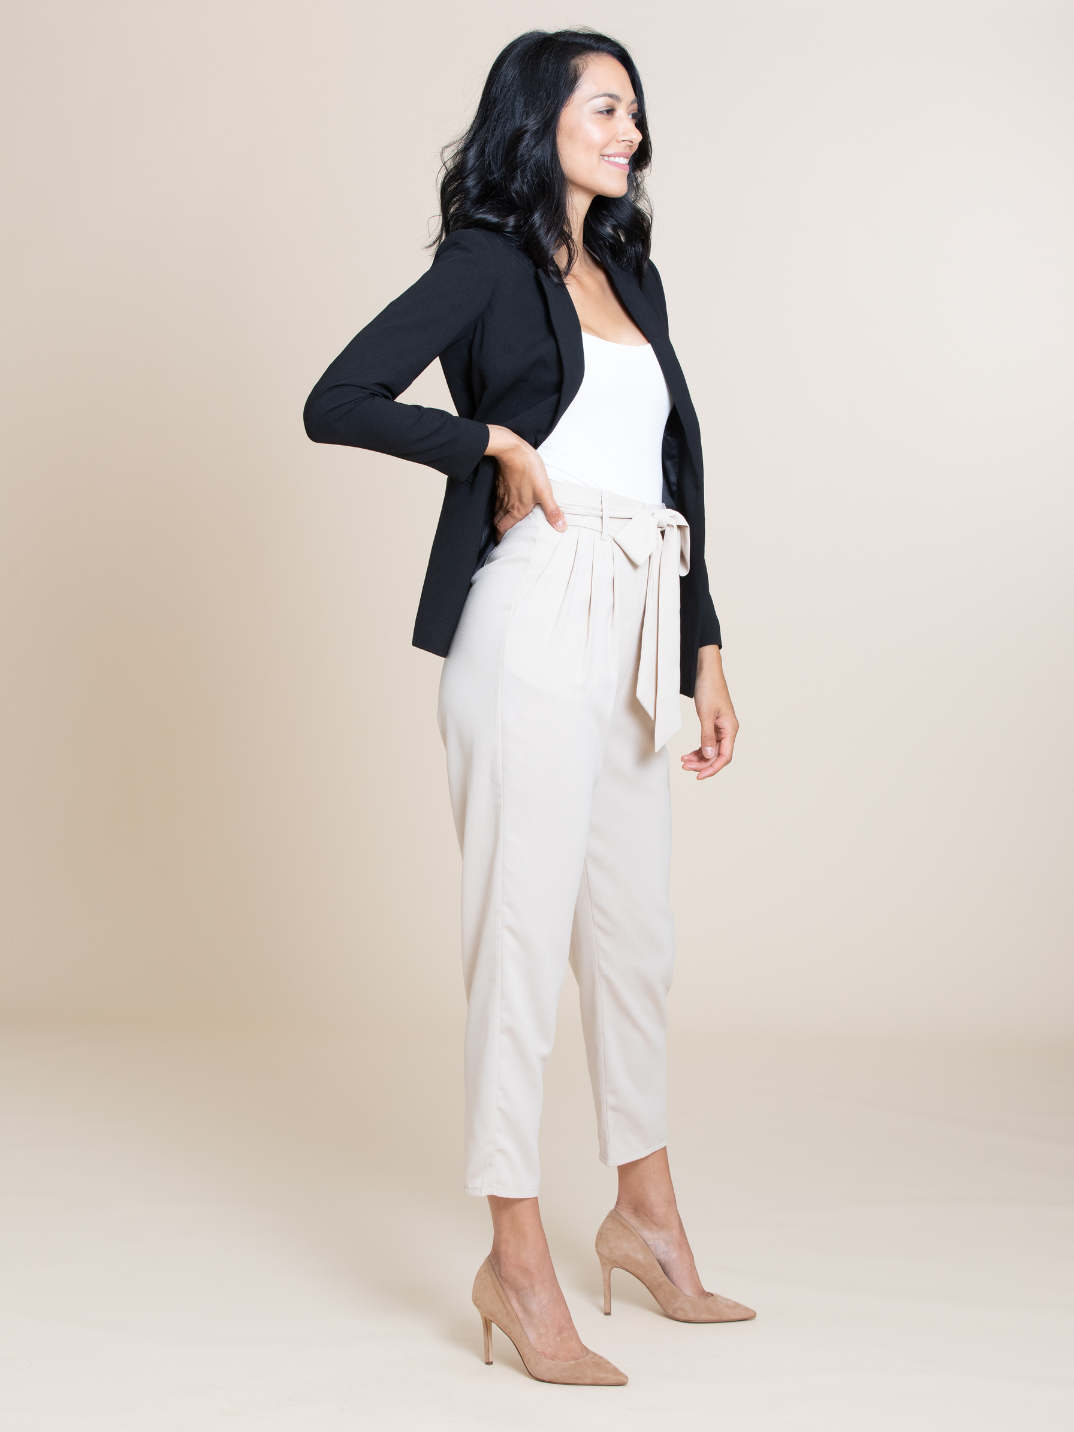 The Sienna Blazer black classic women's blazer workwear basics sustainable fashion capsule wardrobe